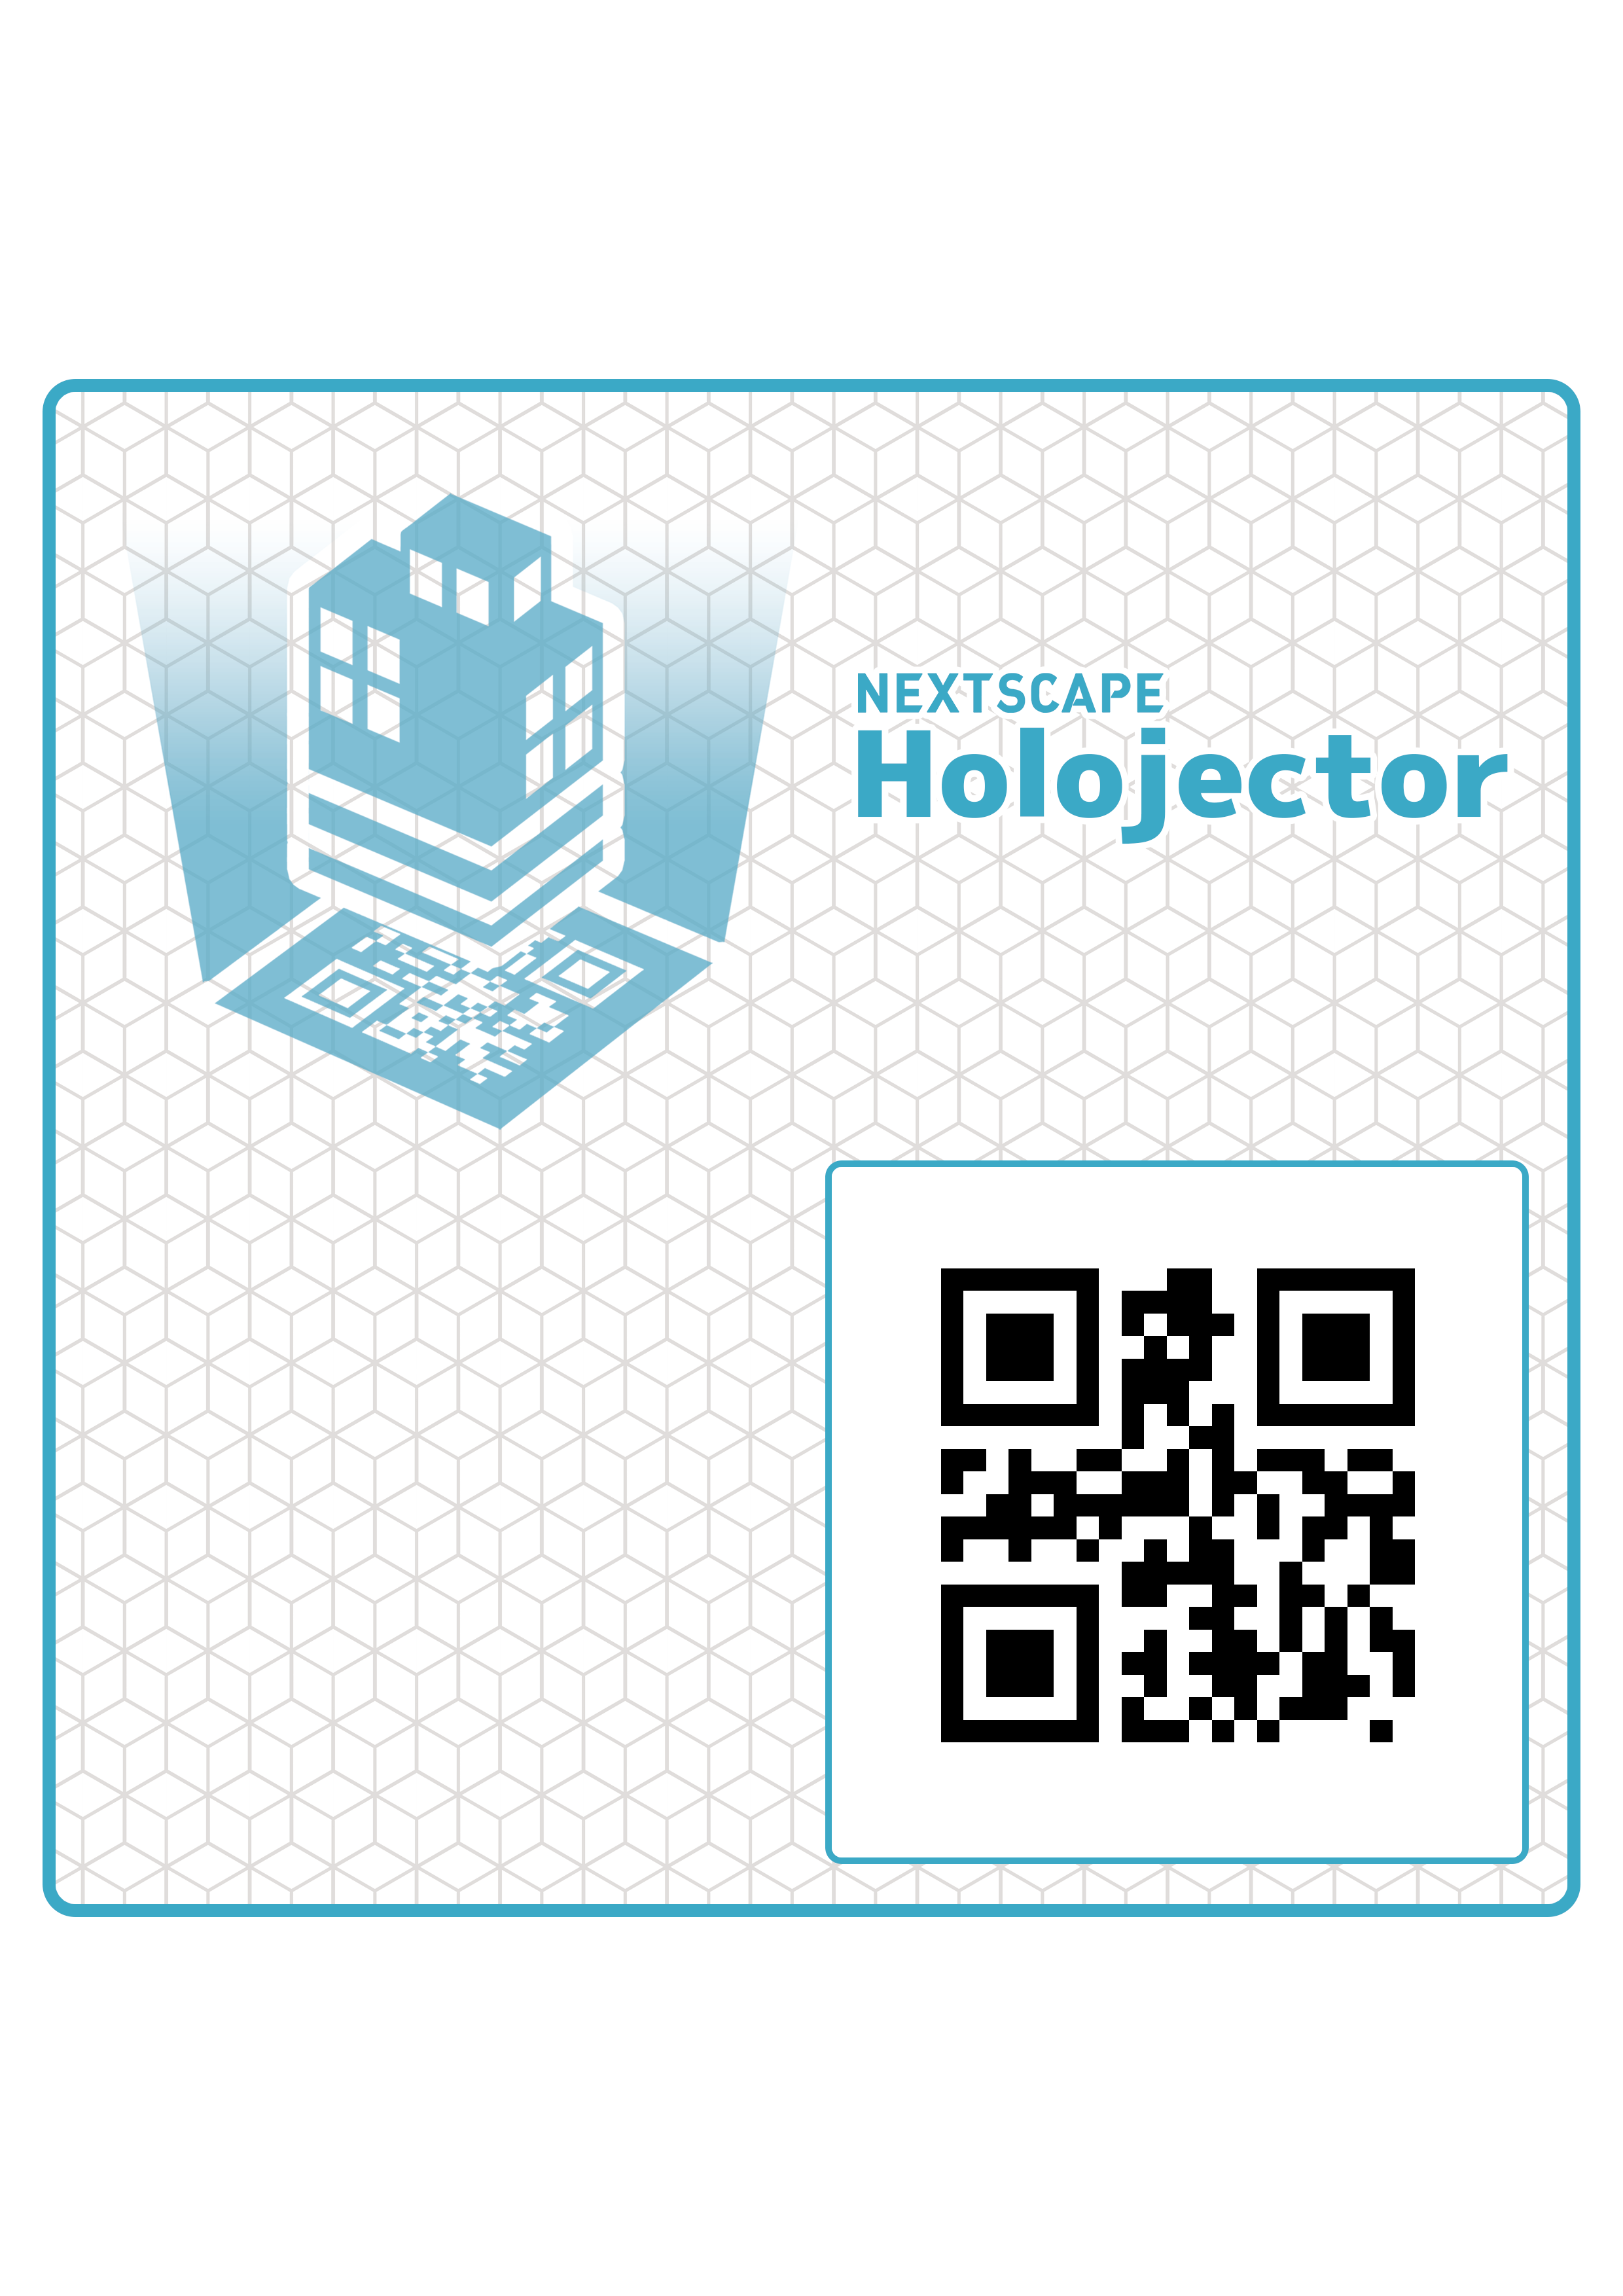 Marker_holojector_logo_61e584c1acd2e600